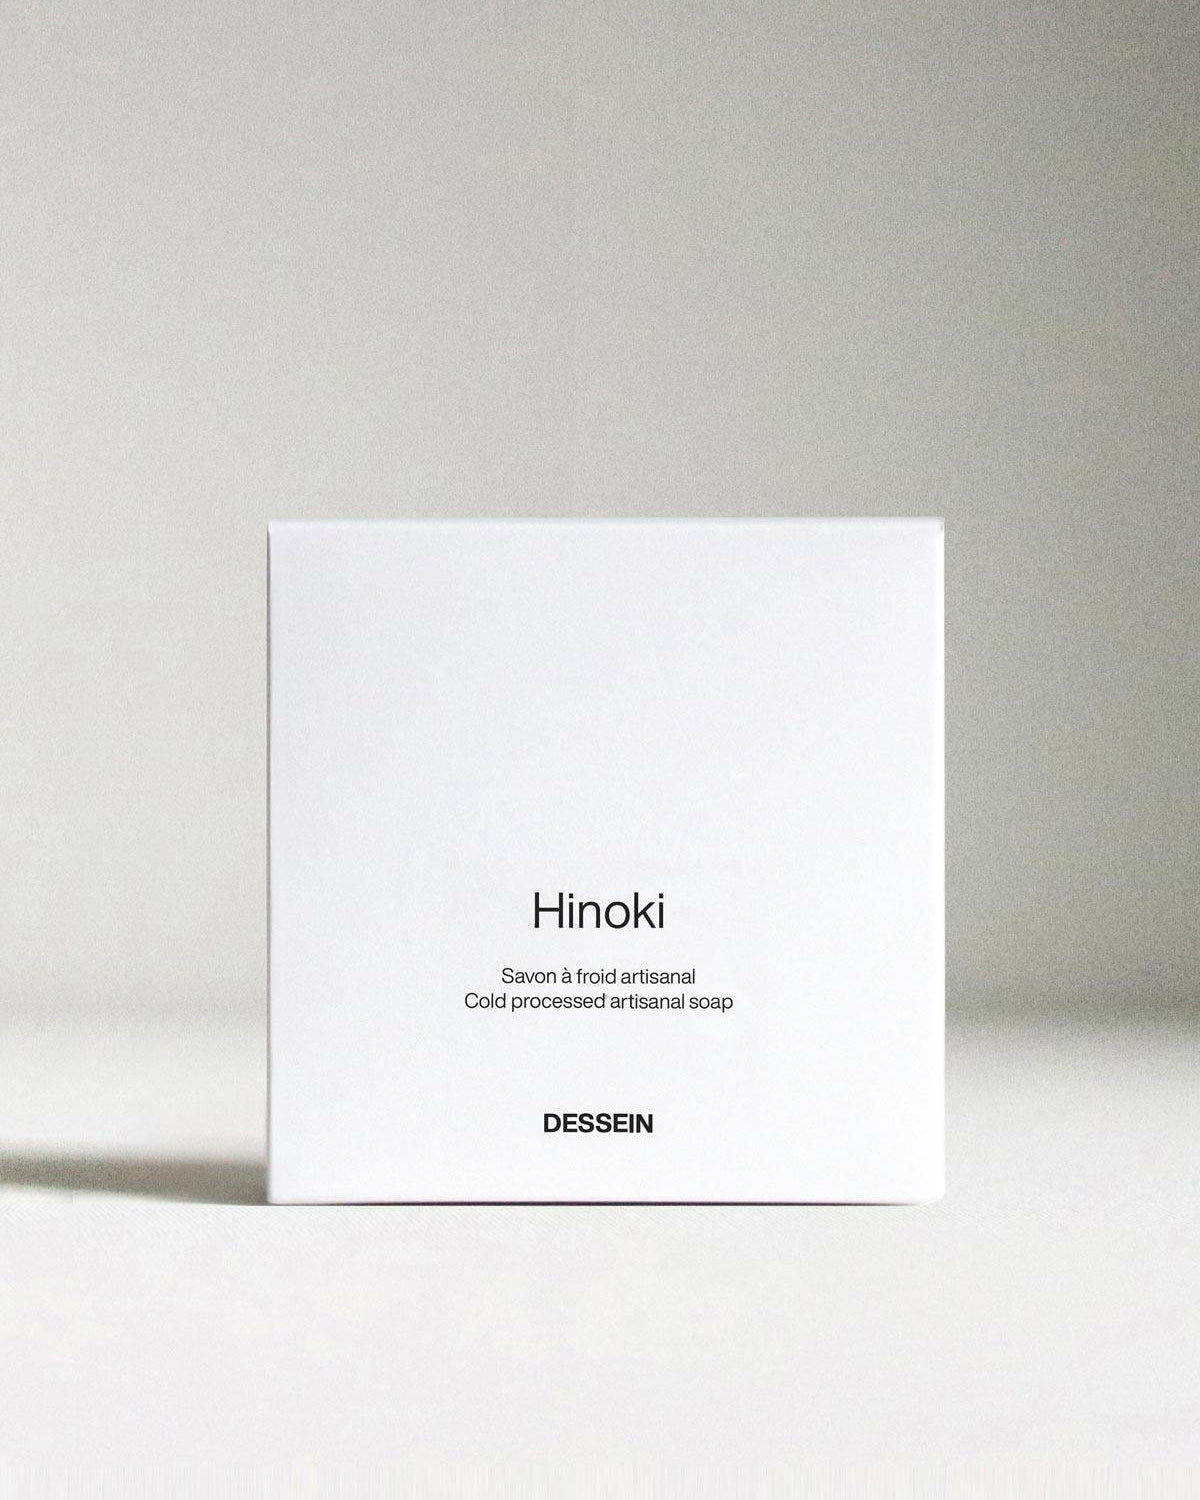 Hinoki - Beauty - Dessein - Elevastor